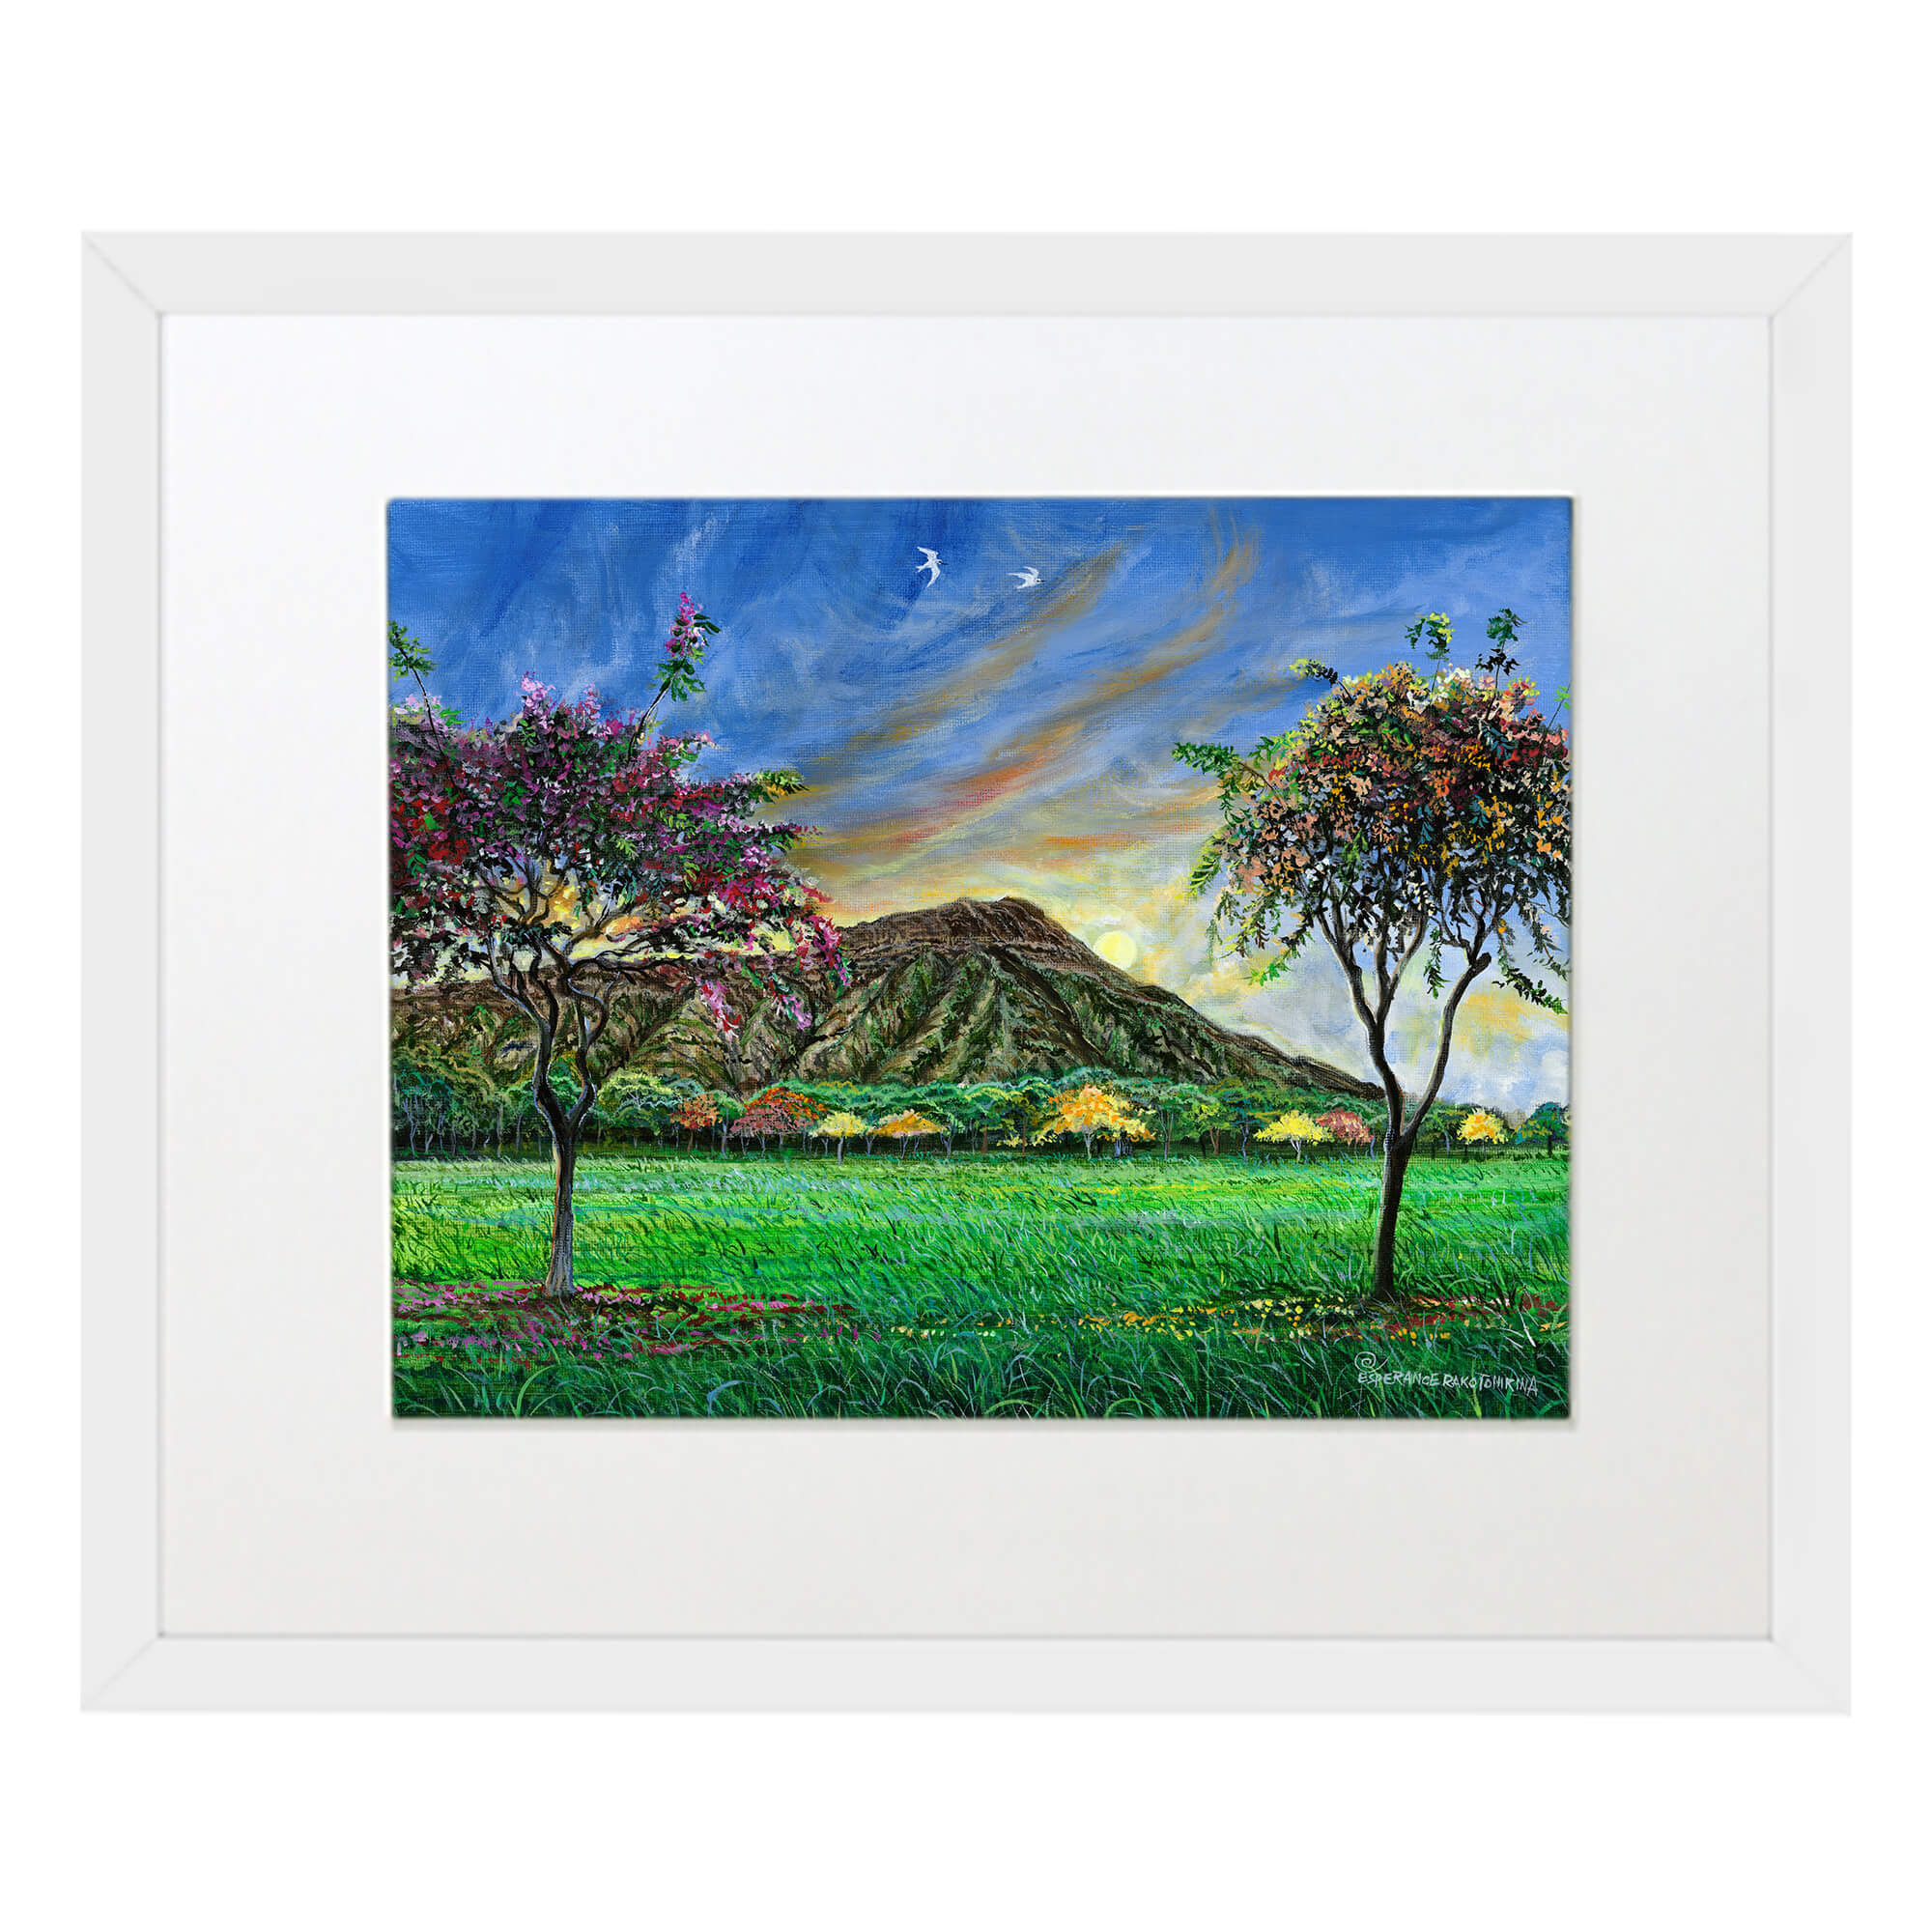 A matted art print with white frame illustrating Serene mountain landscape with trees by hawaii artist Esperance Rakotonirina